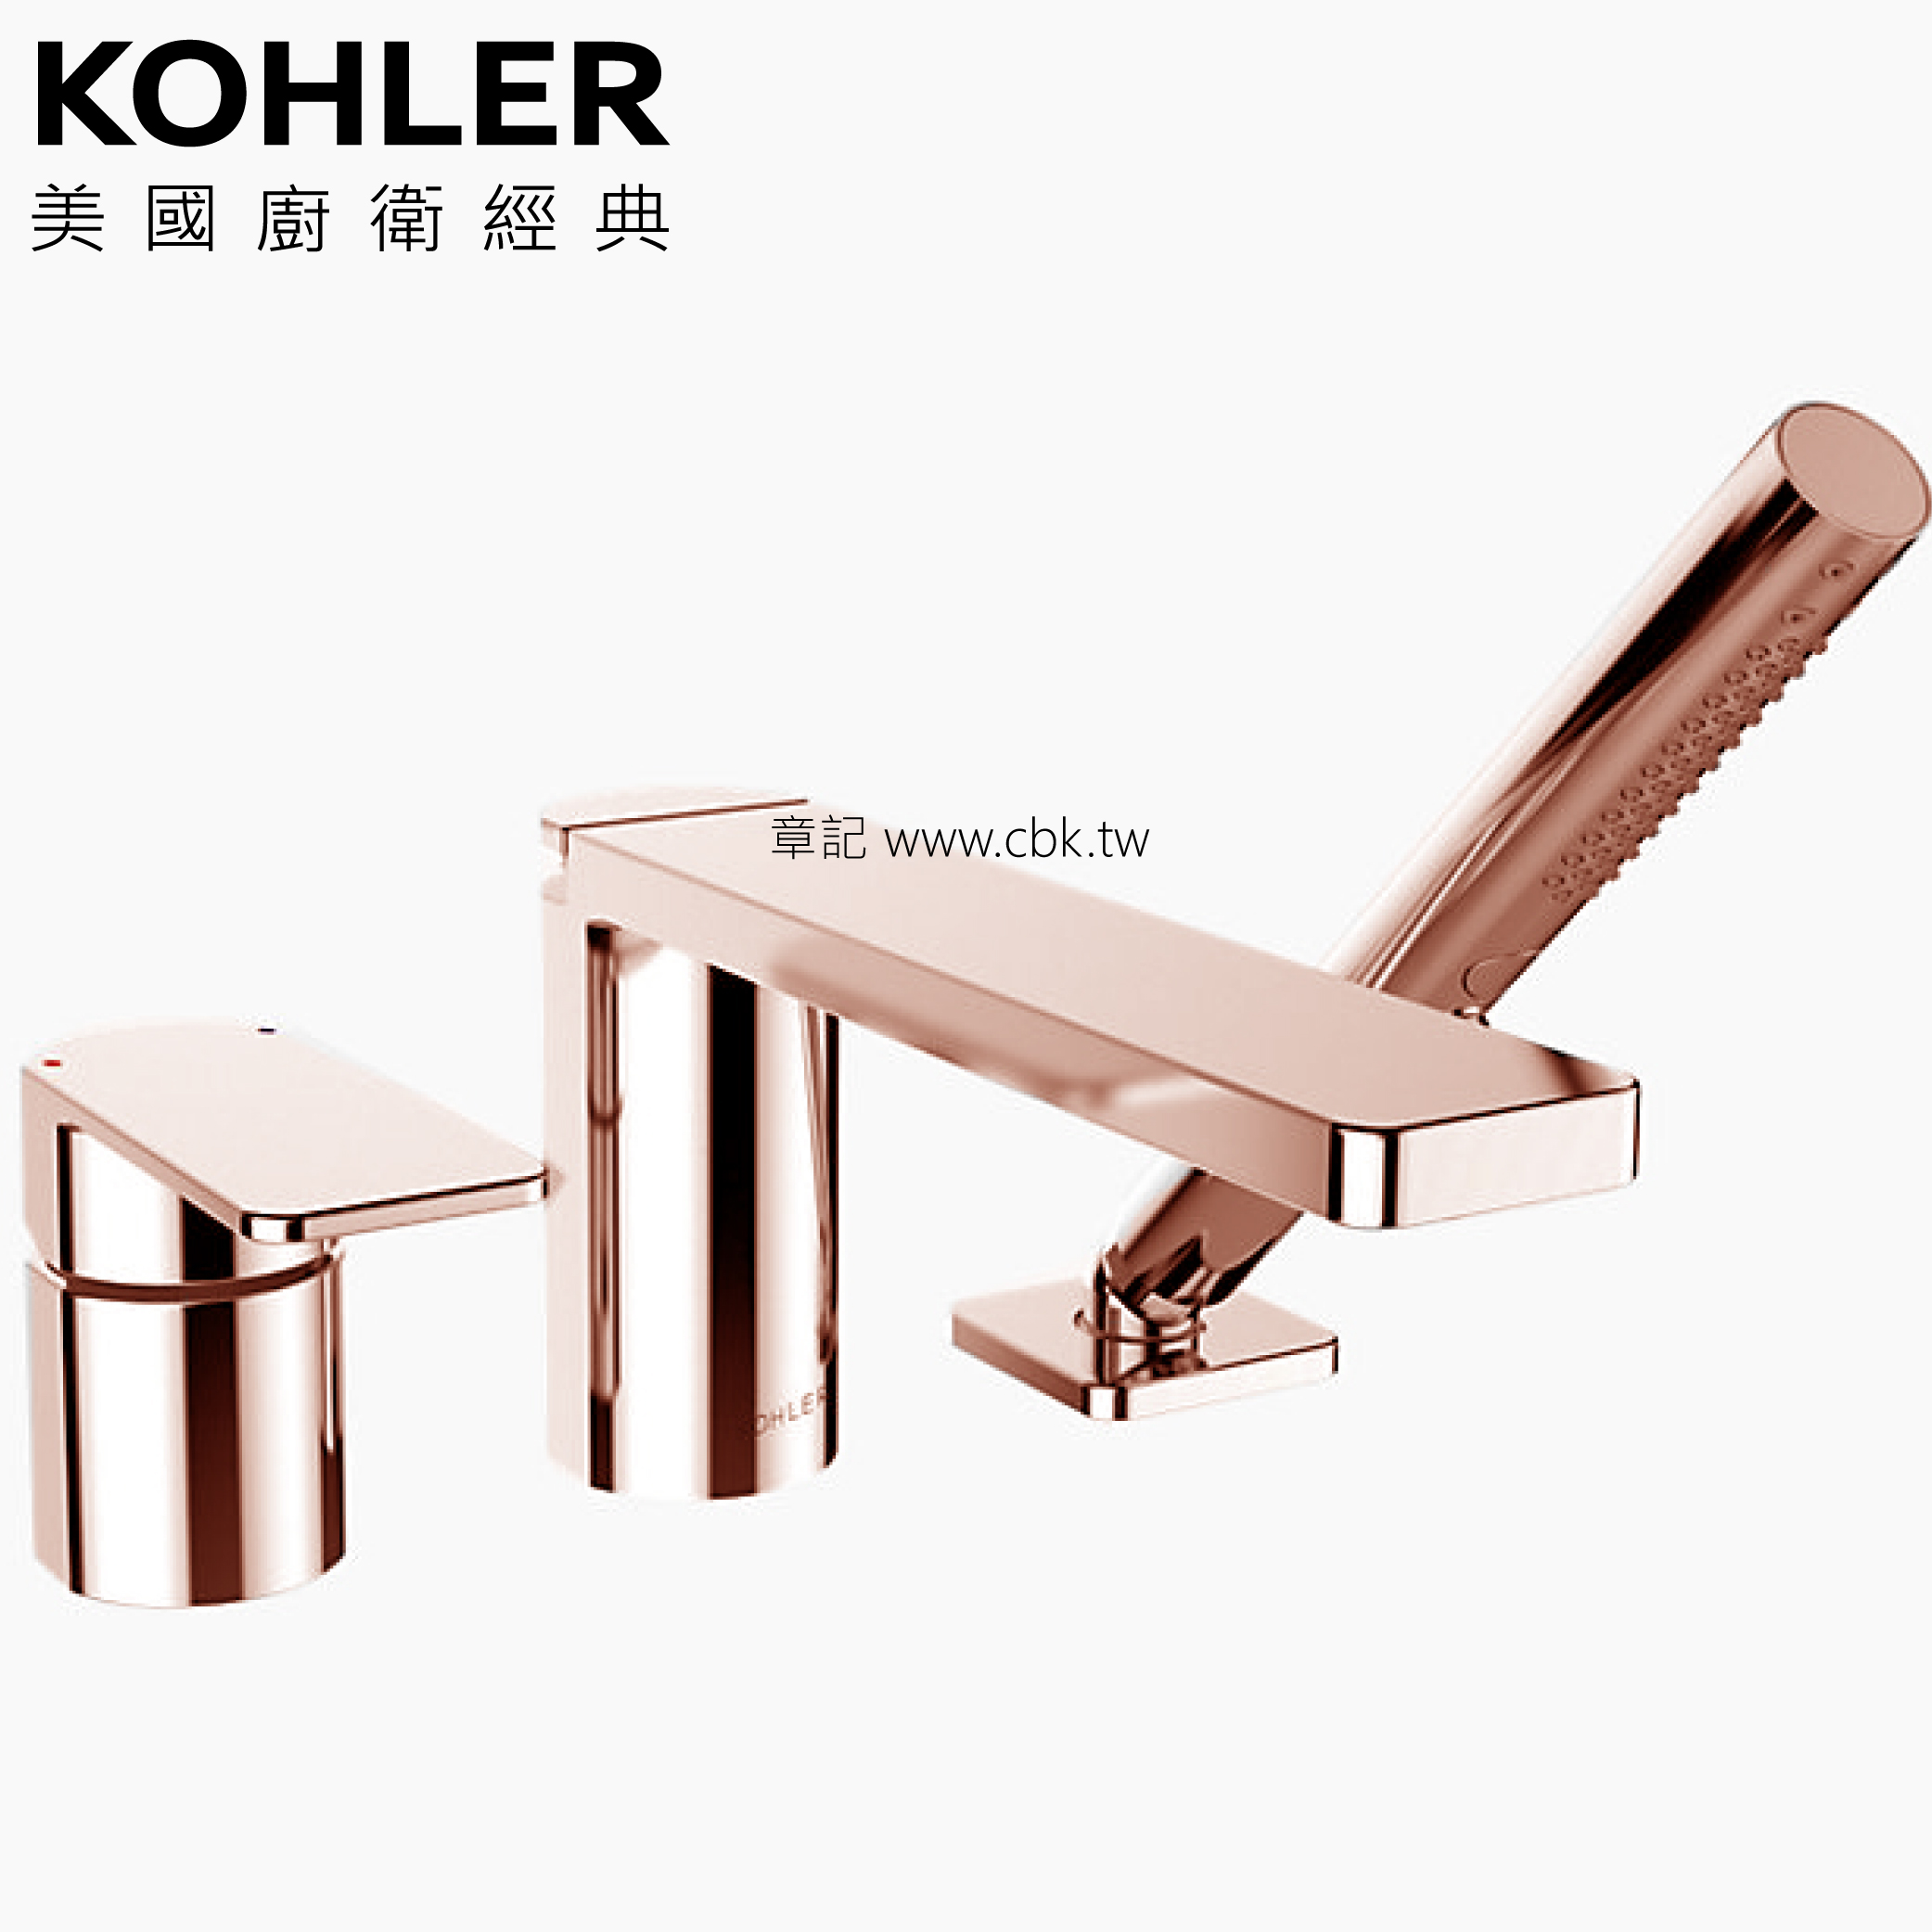 KOHLER Parallel 缸上型龍頭(玫瑰金) K-23488T-4-RGD  |SPA淋浴設備|浴缸龍頭